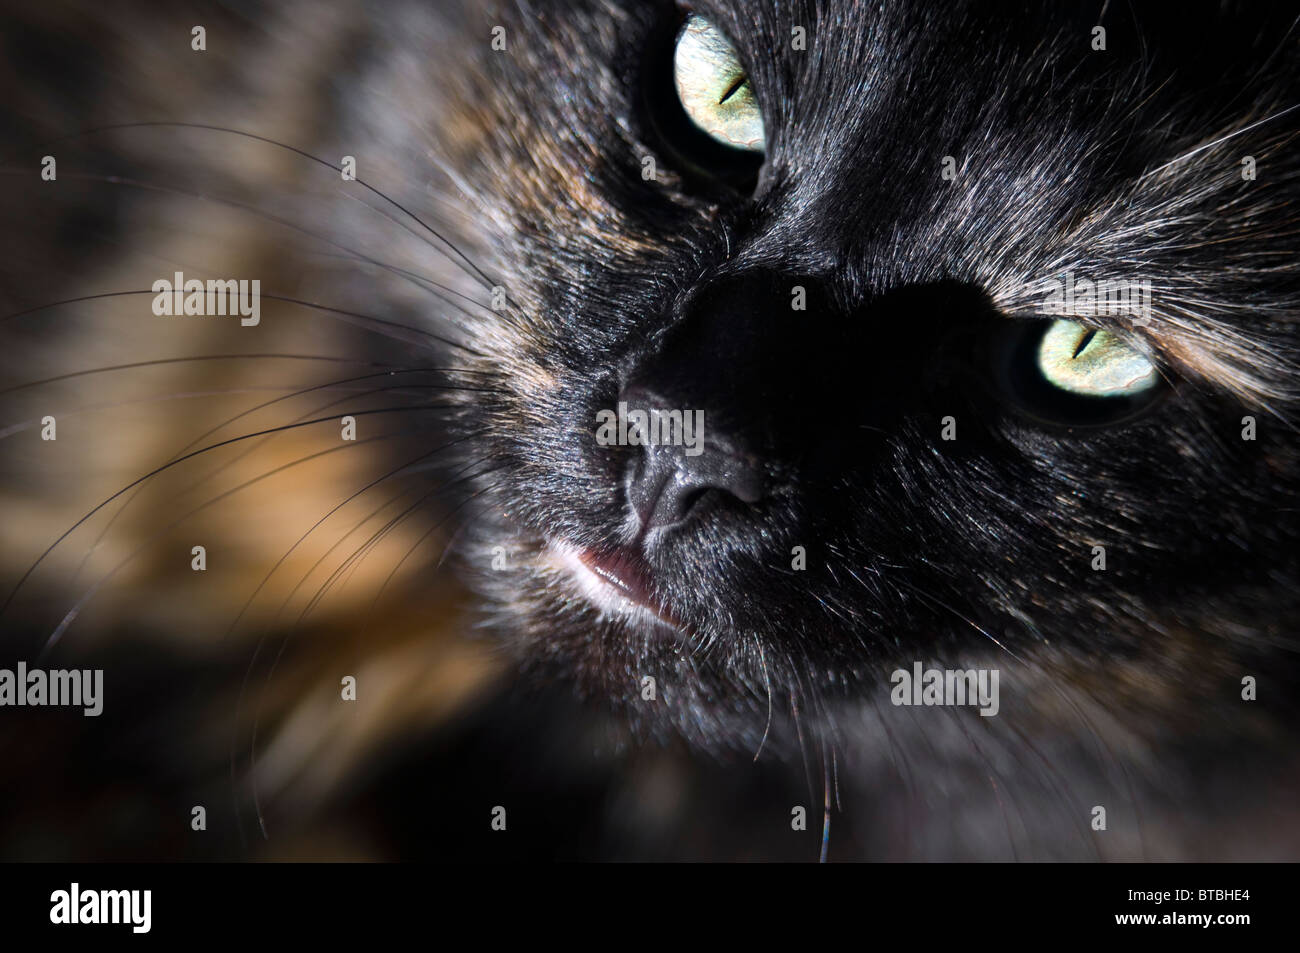 Close up of cat looking up at camera Stock Photo